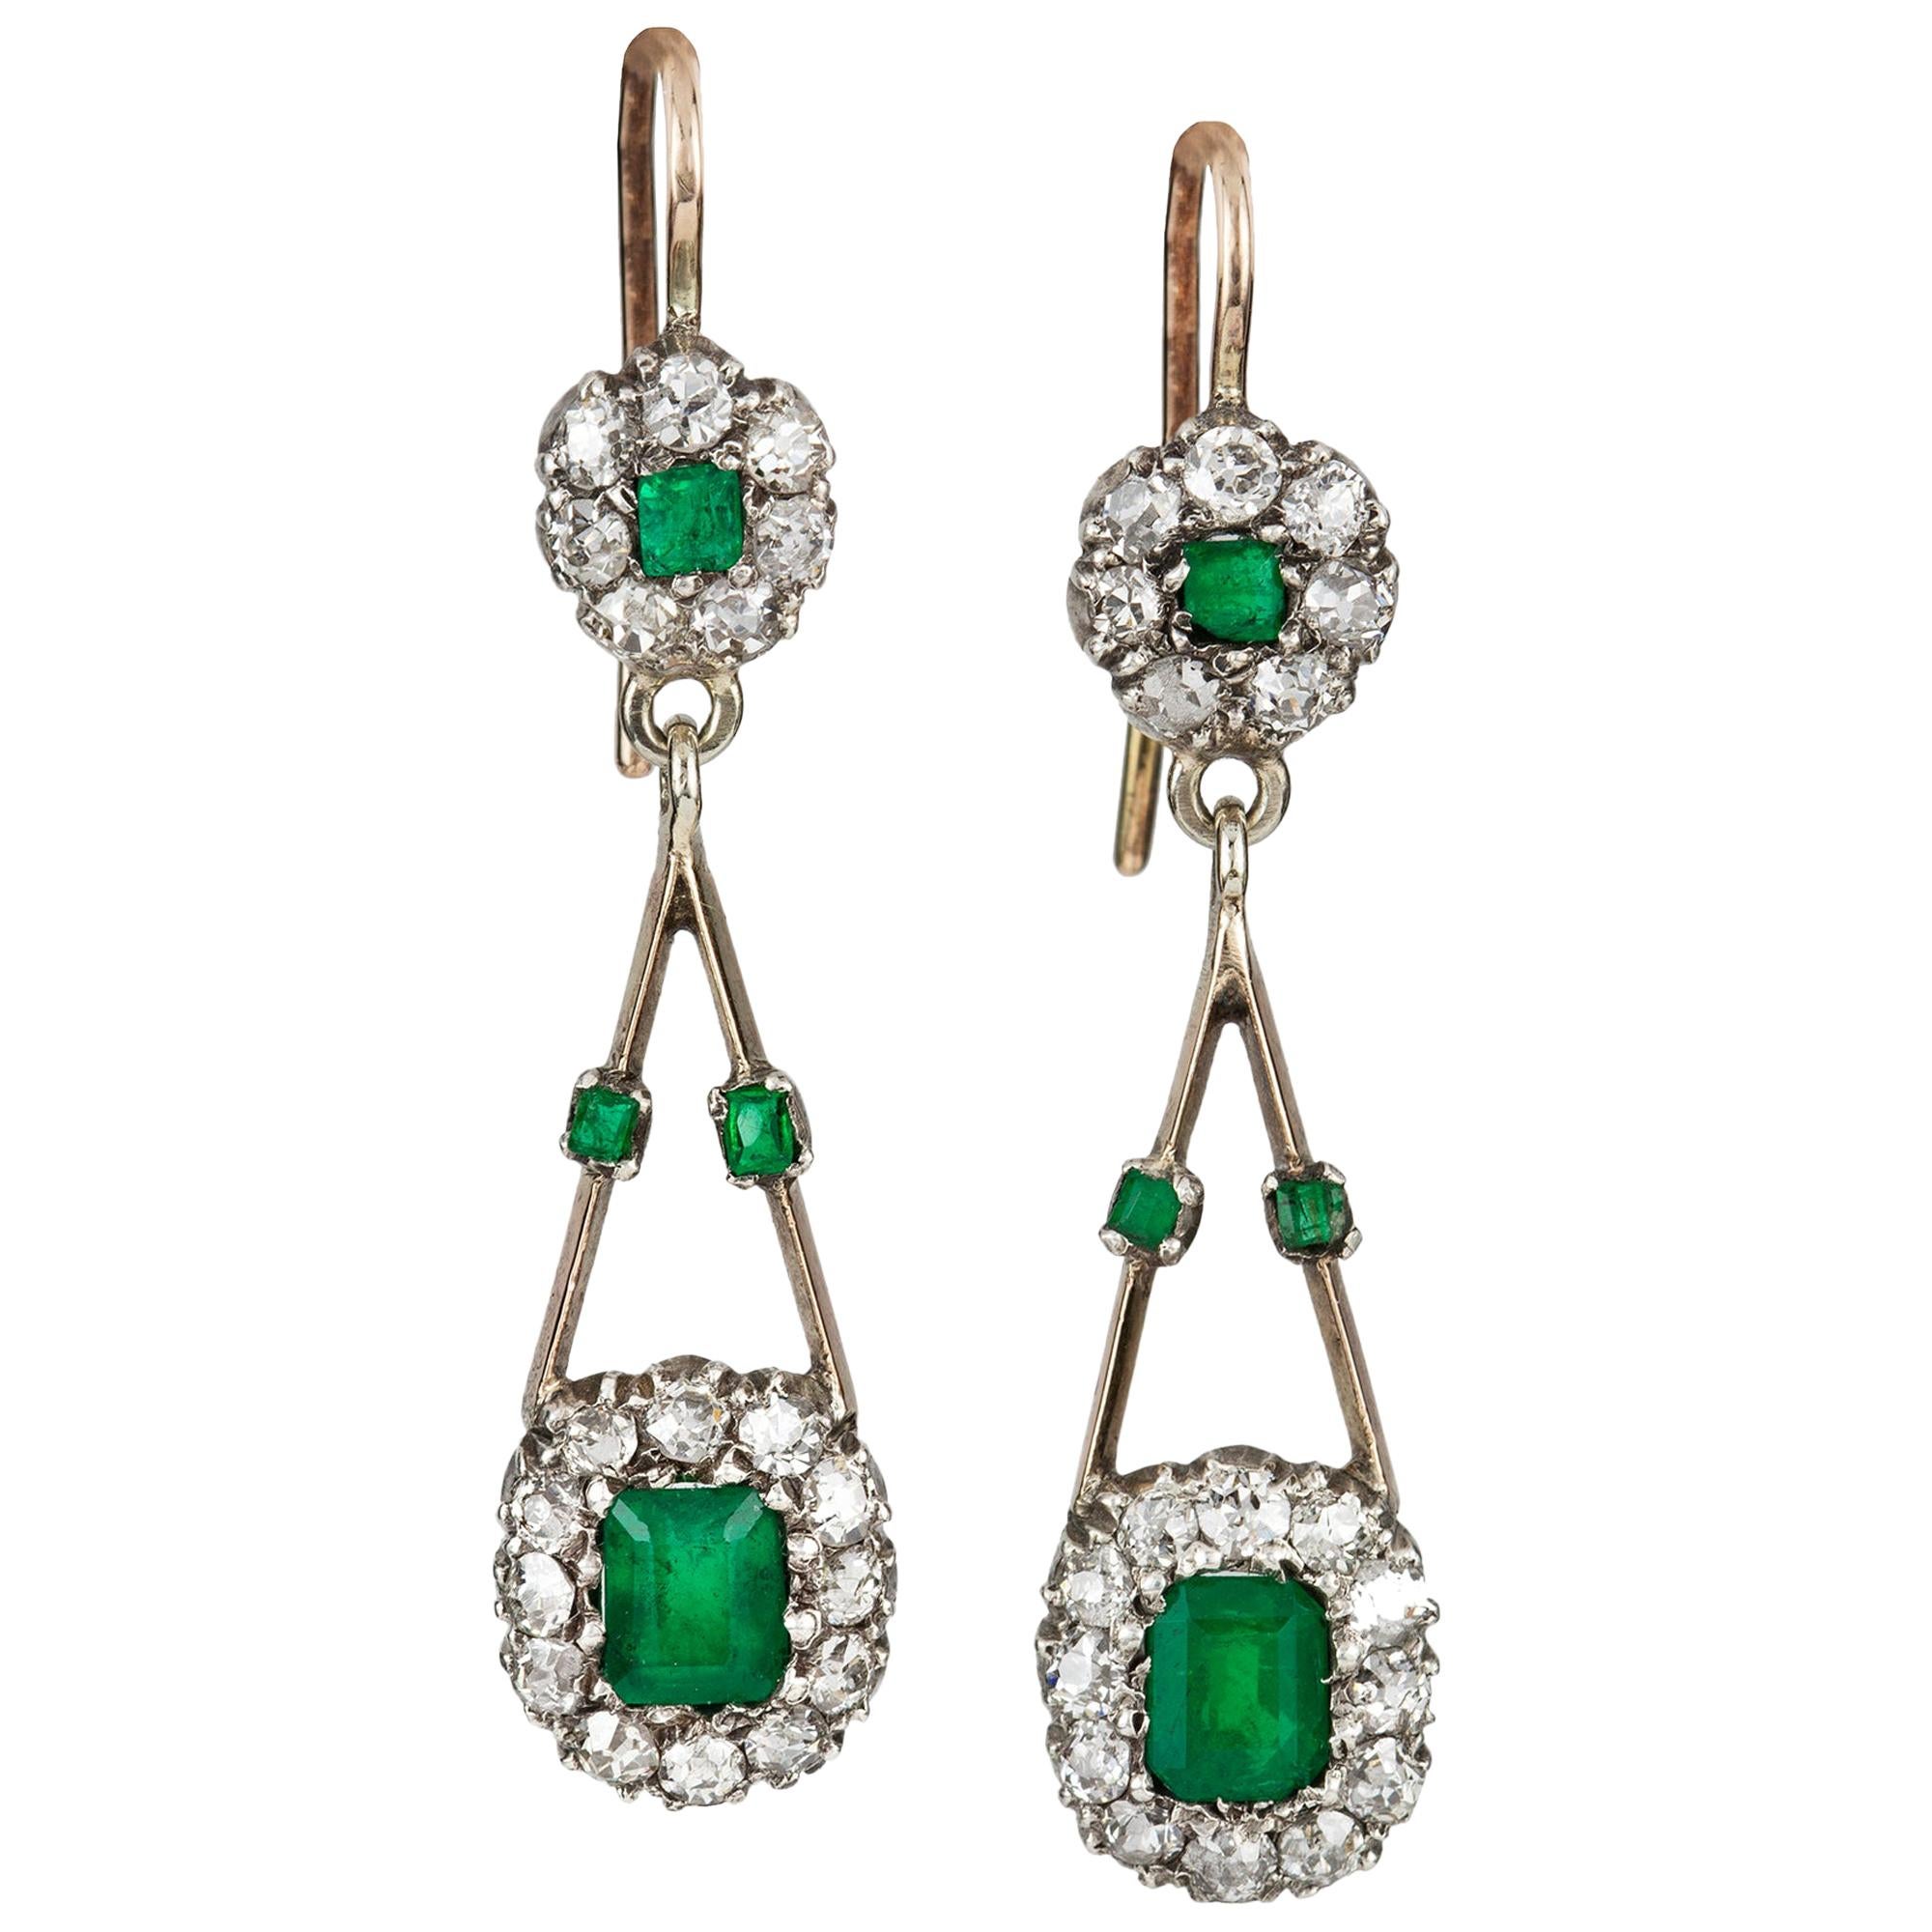 Pair of Edwardian Emerald and Diamond Earrings